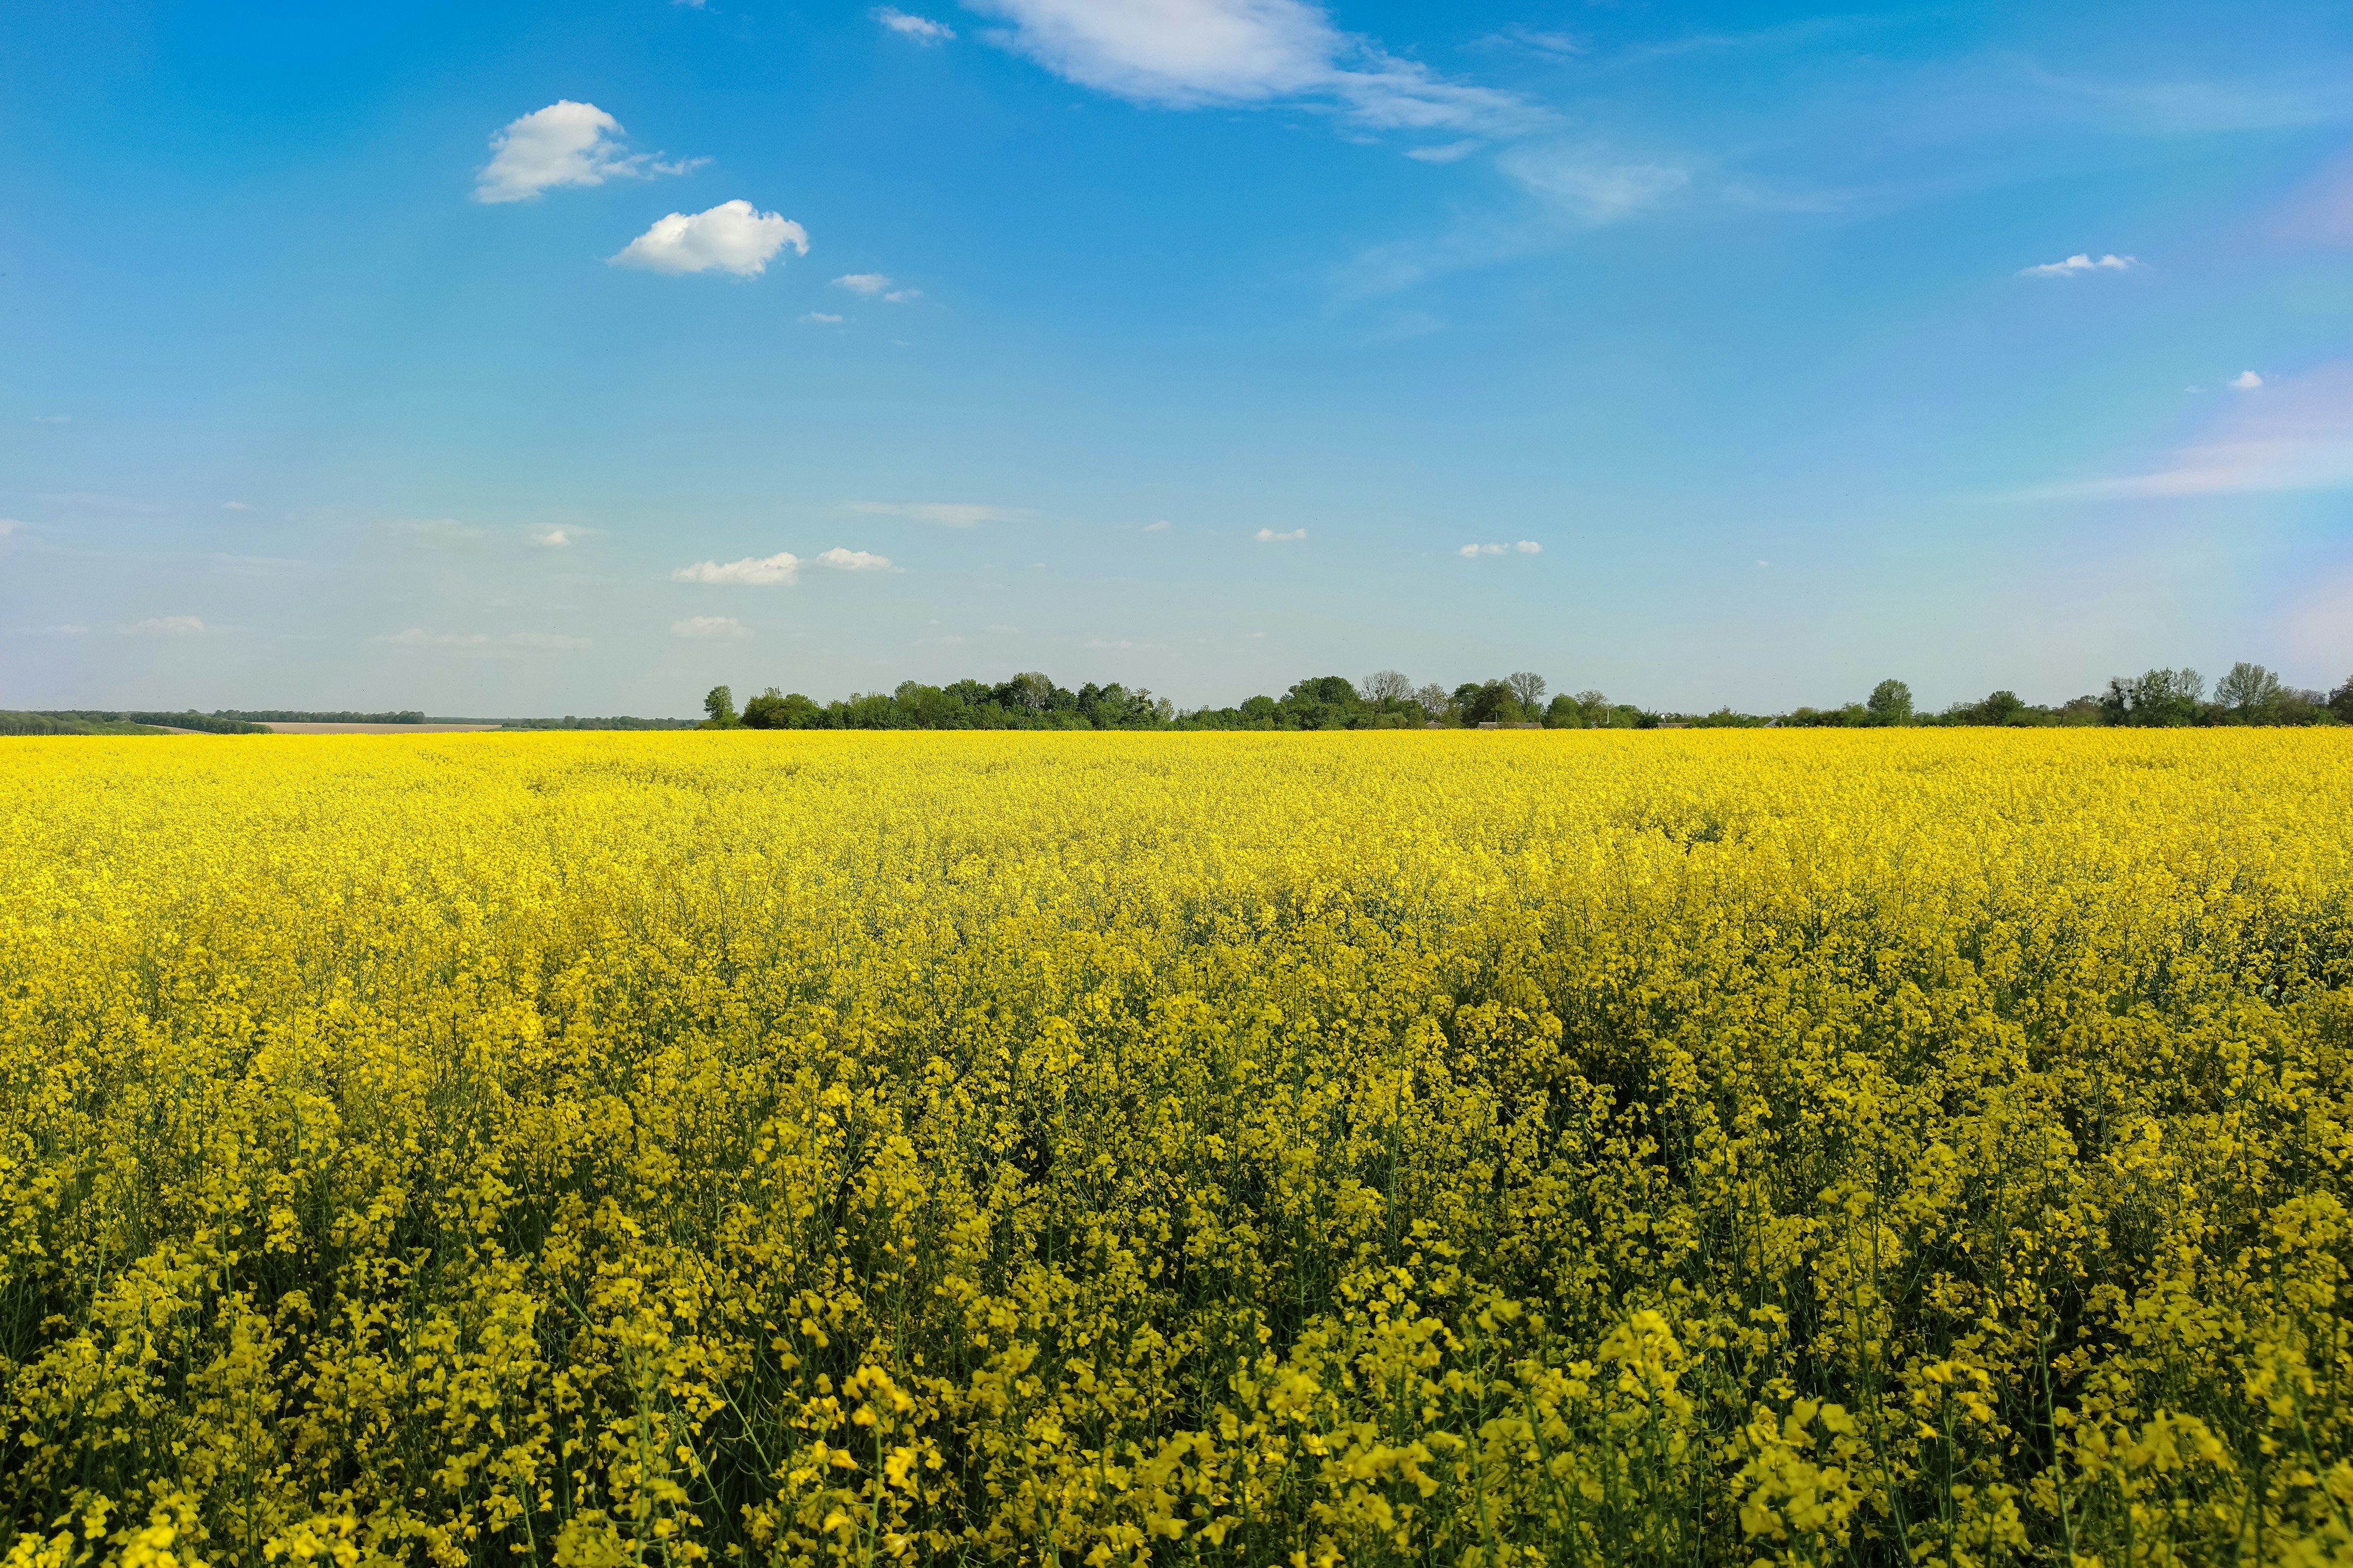 yellow flower field under blue sky during daytime